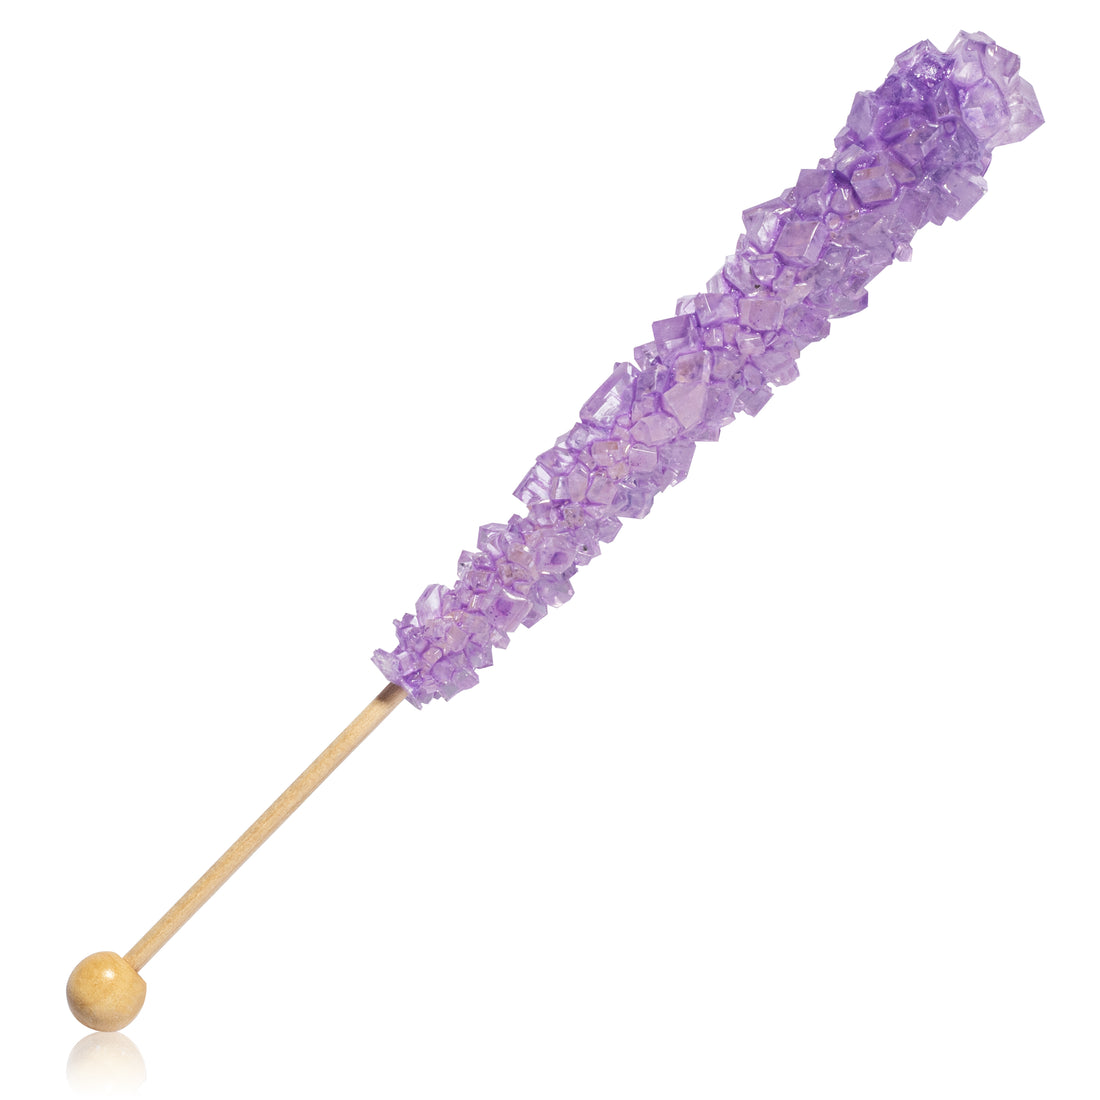 Lavender Rock Candy Sugar Sticks - Tutti Frutti Flavor